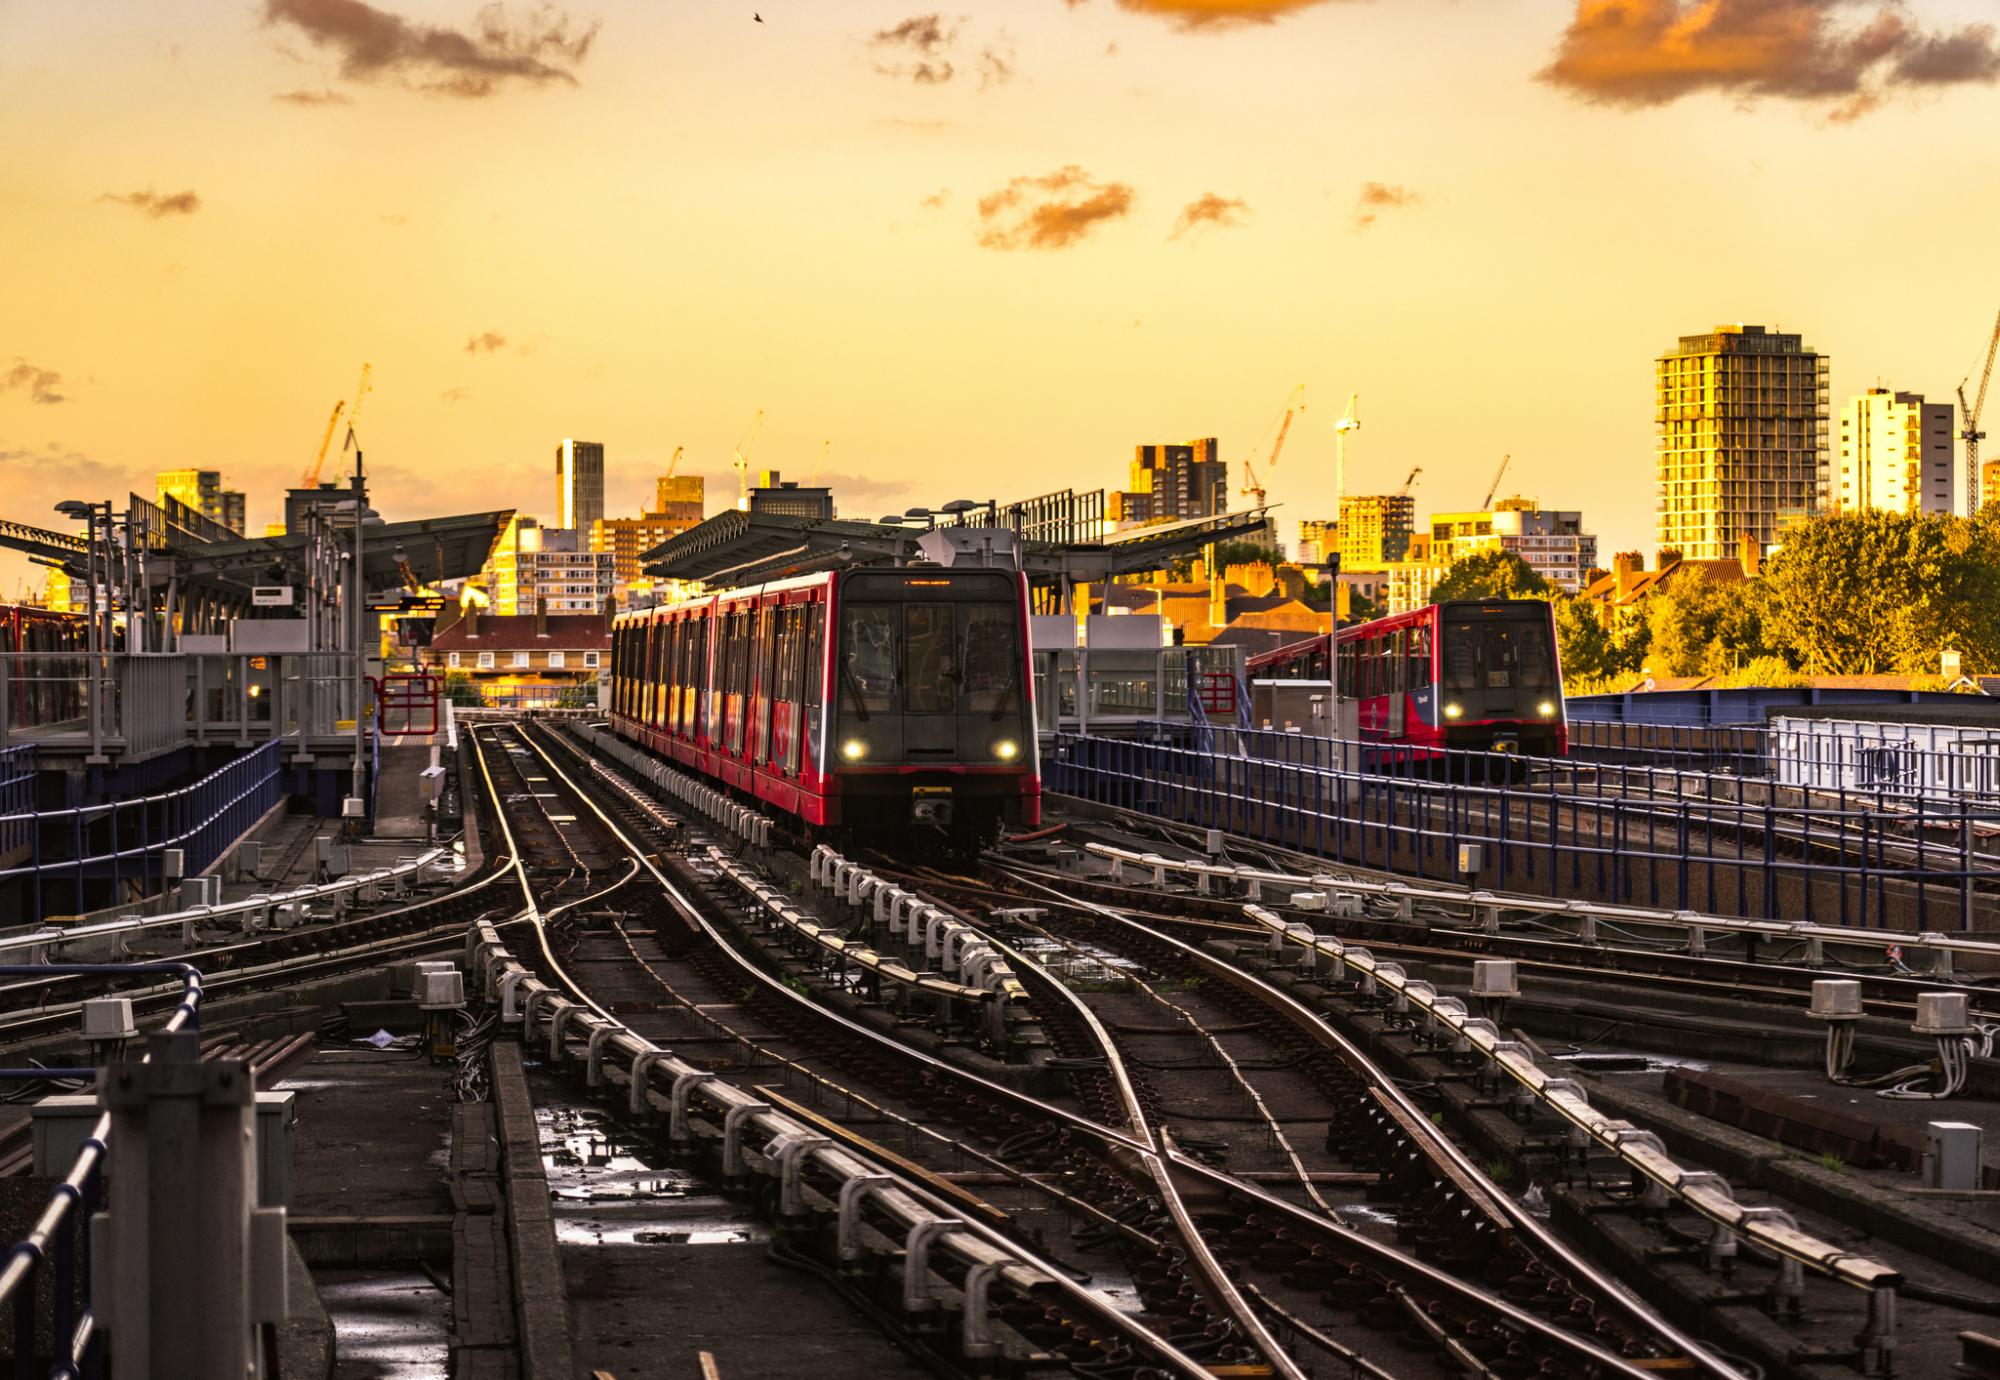 Docklands Light Railway (DLR) trains at sunset